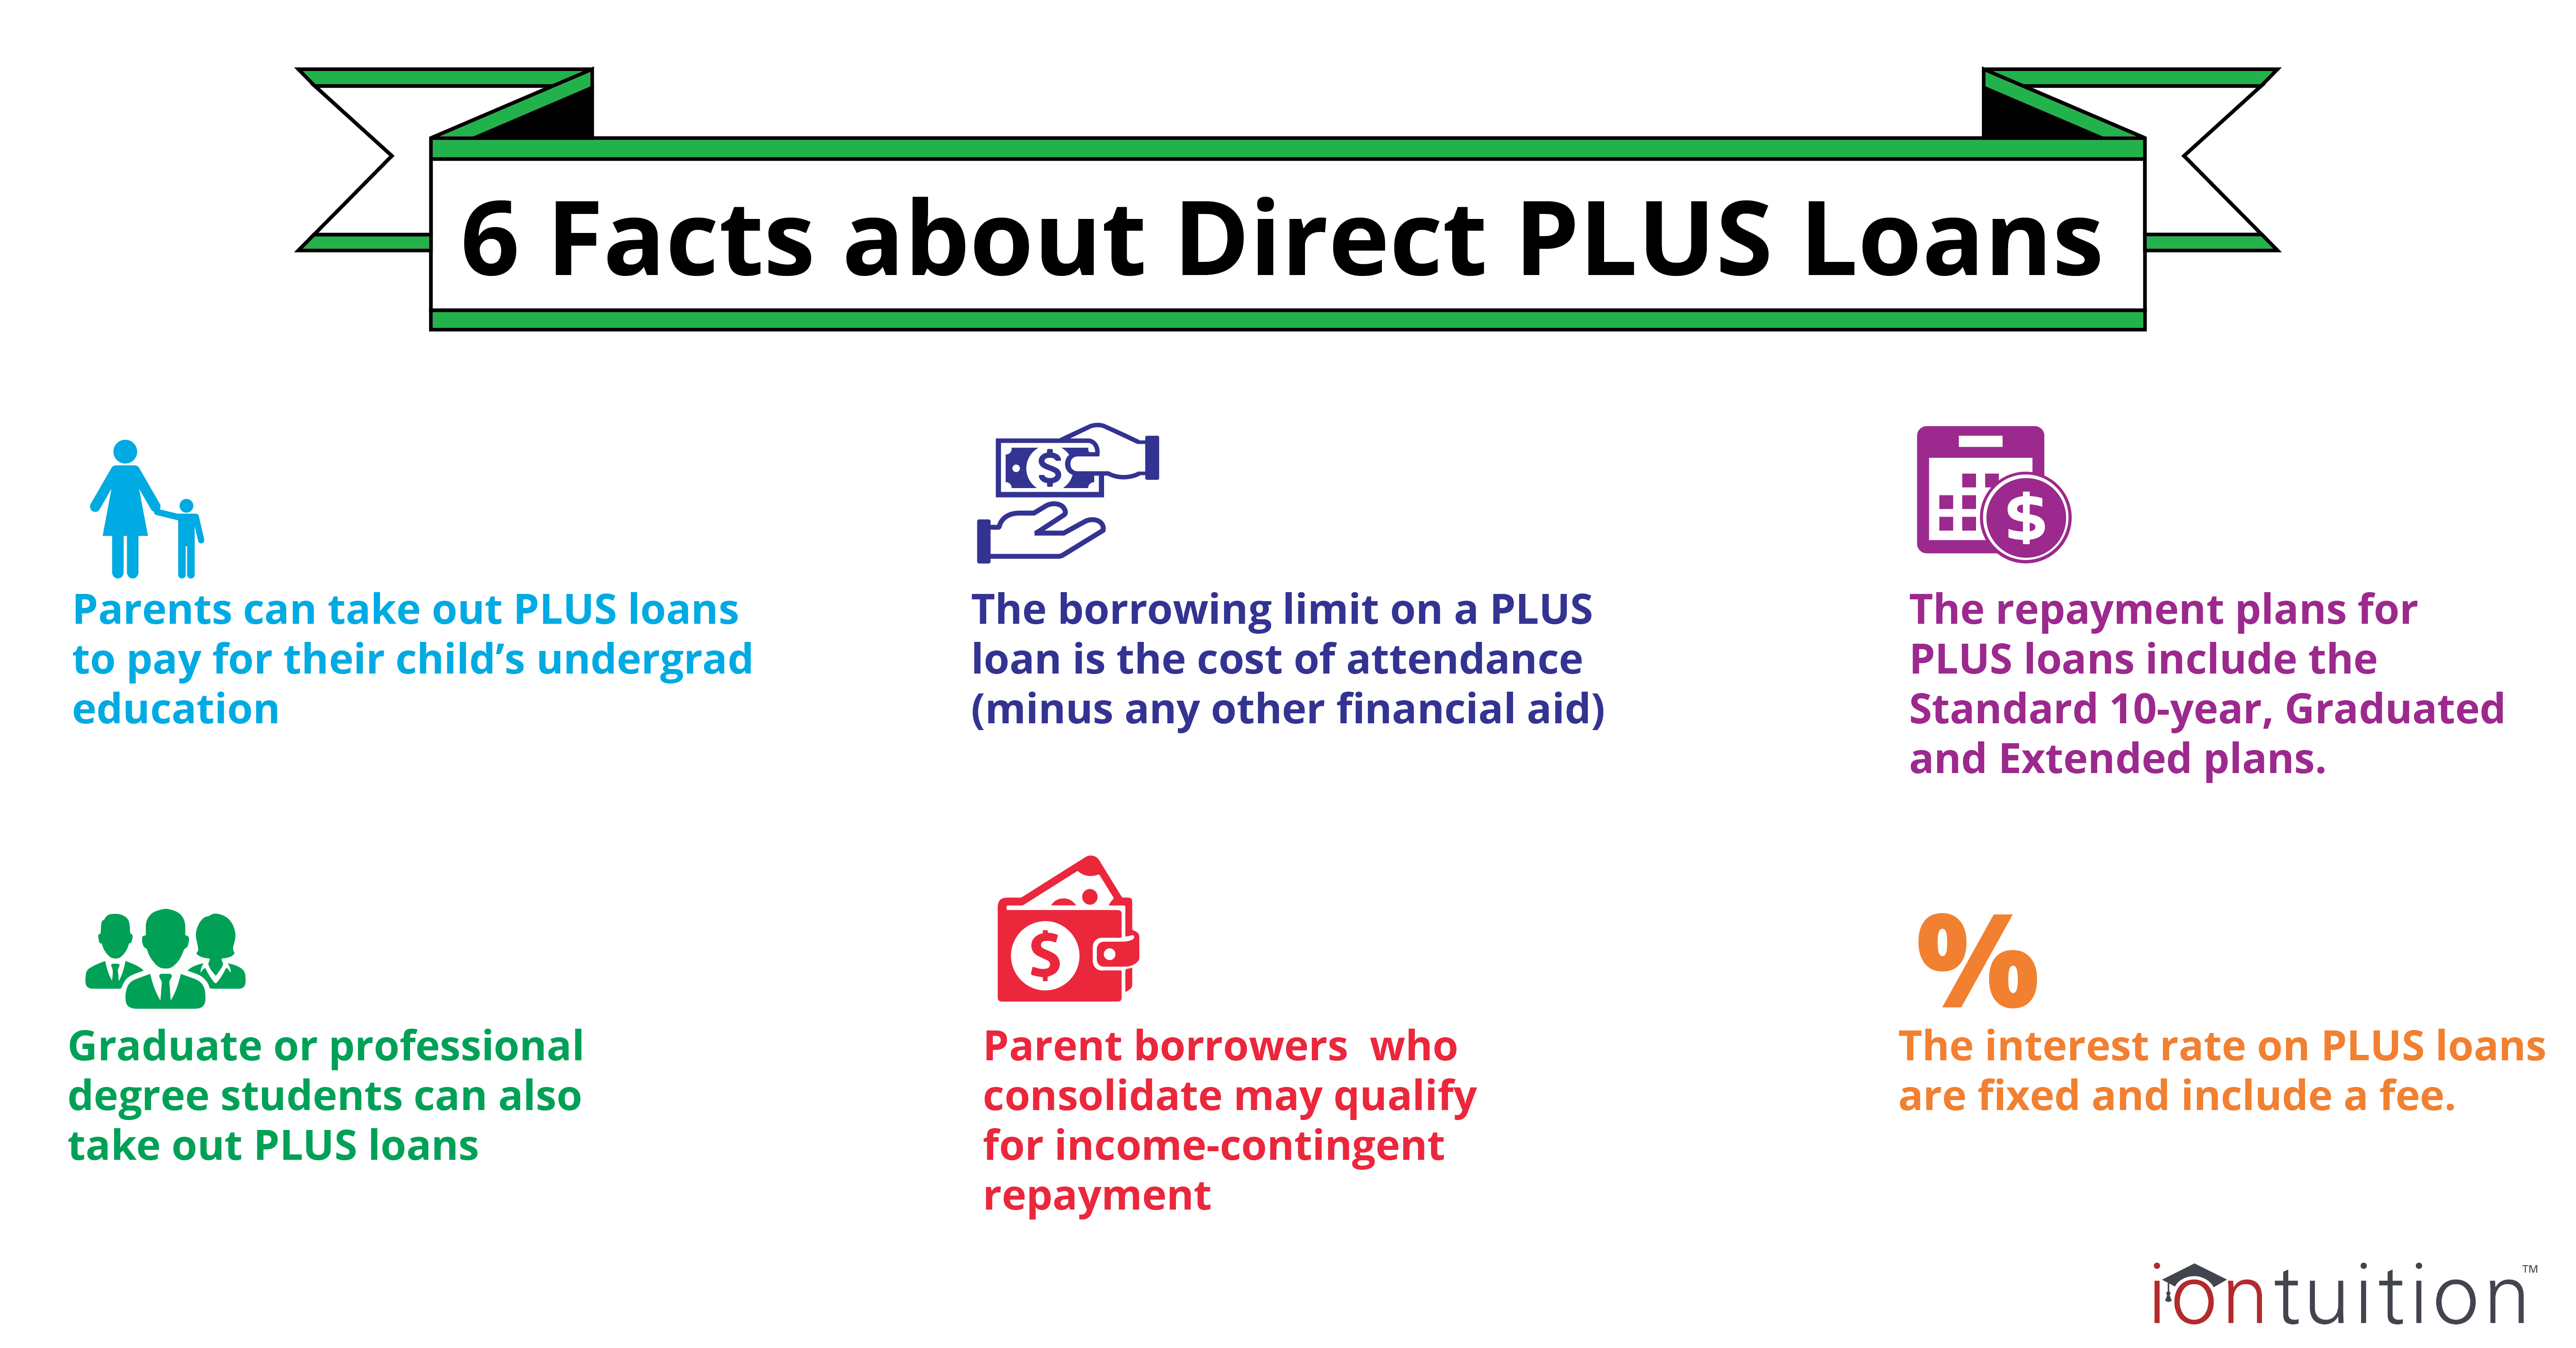 Direct PLUS Loans Help Parents and Grad Students